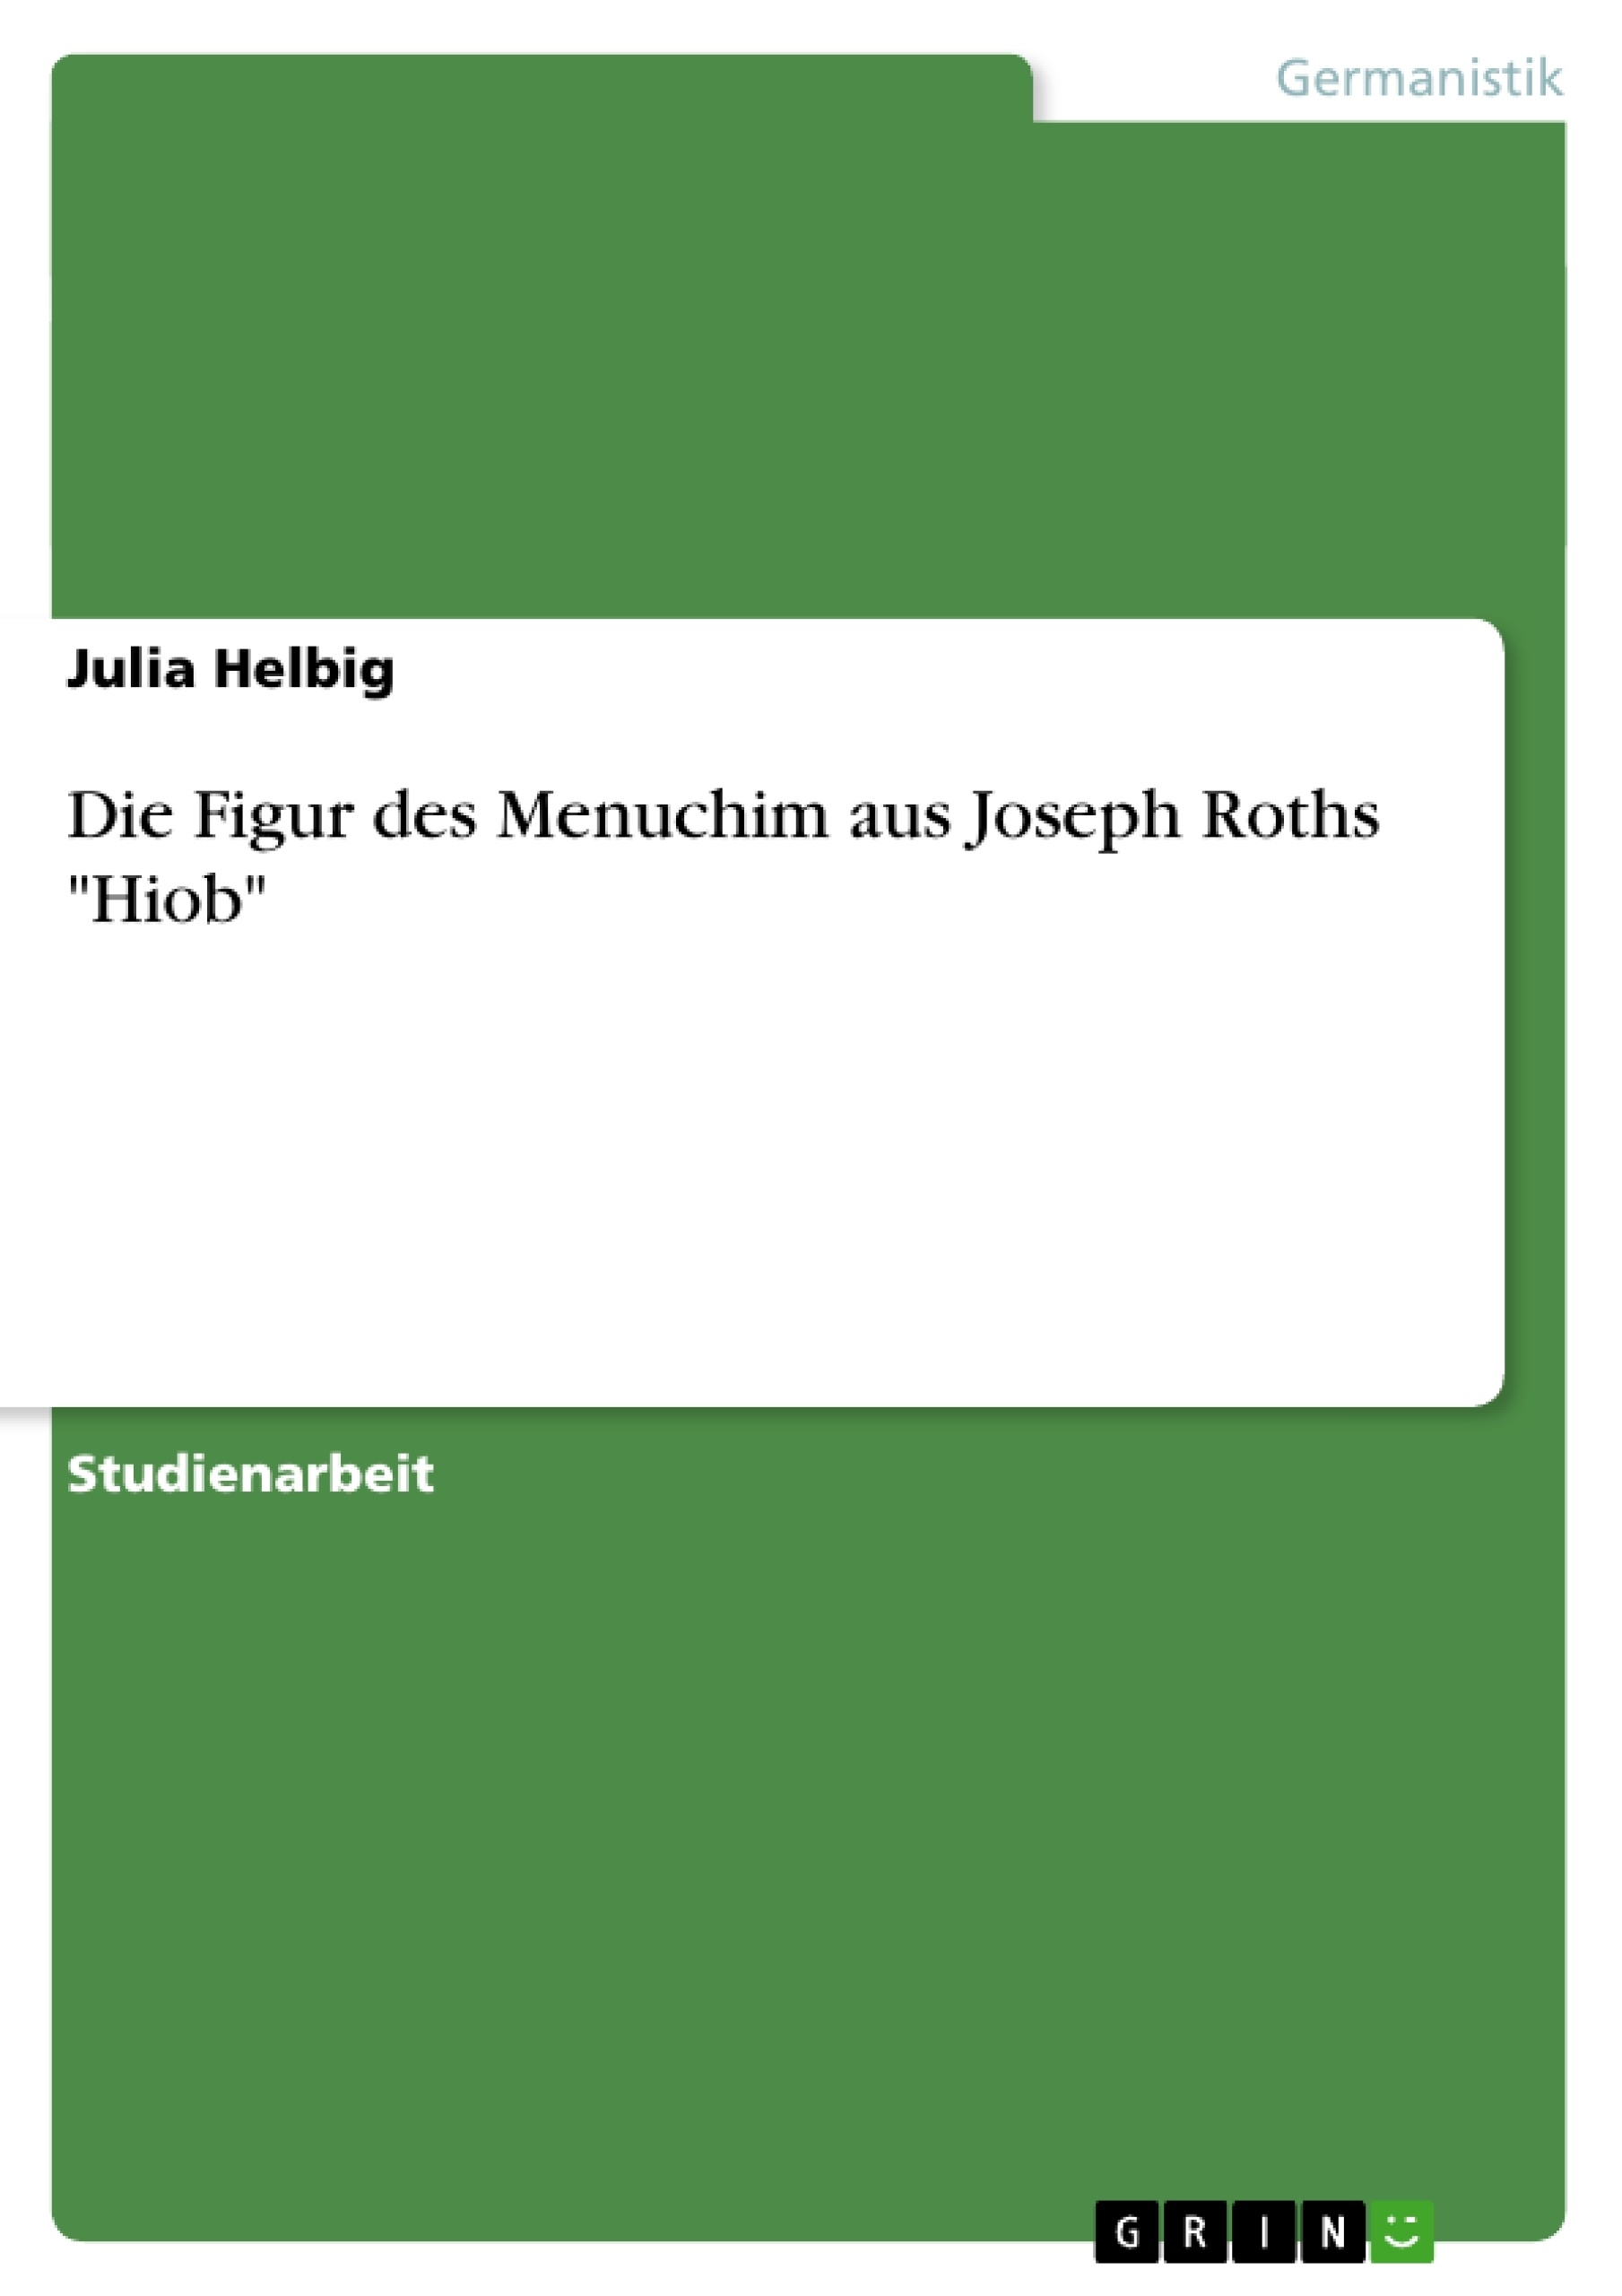 Title: Die Figur des Menuchim aus Joseph Roths "Hiob"